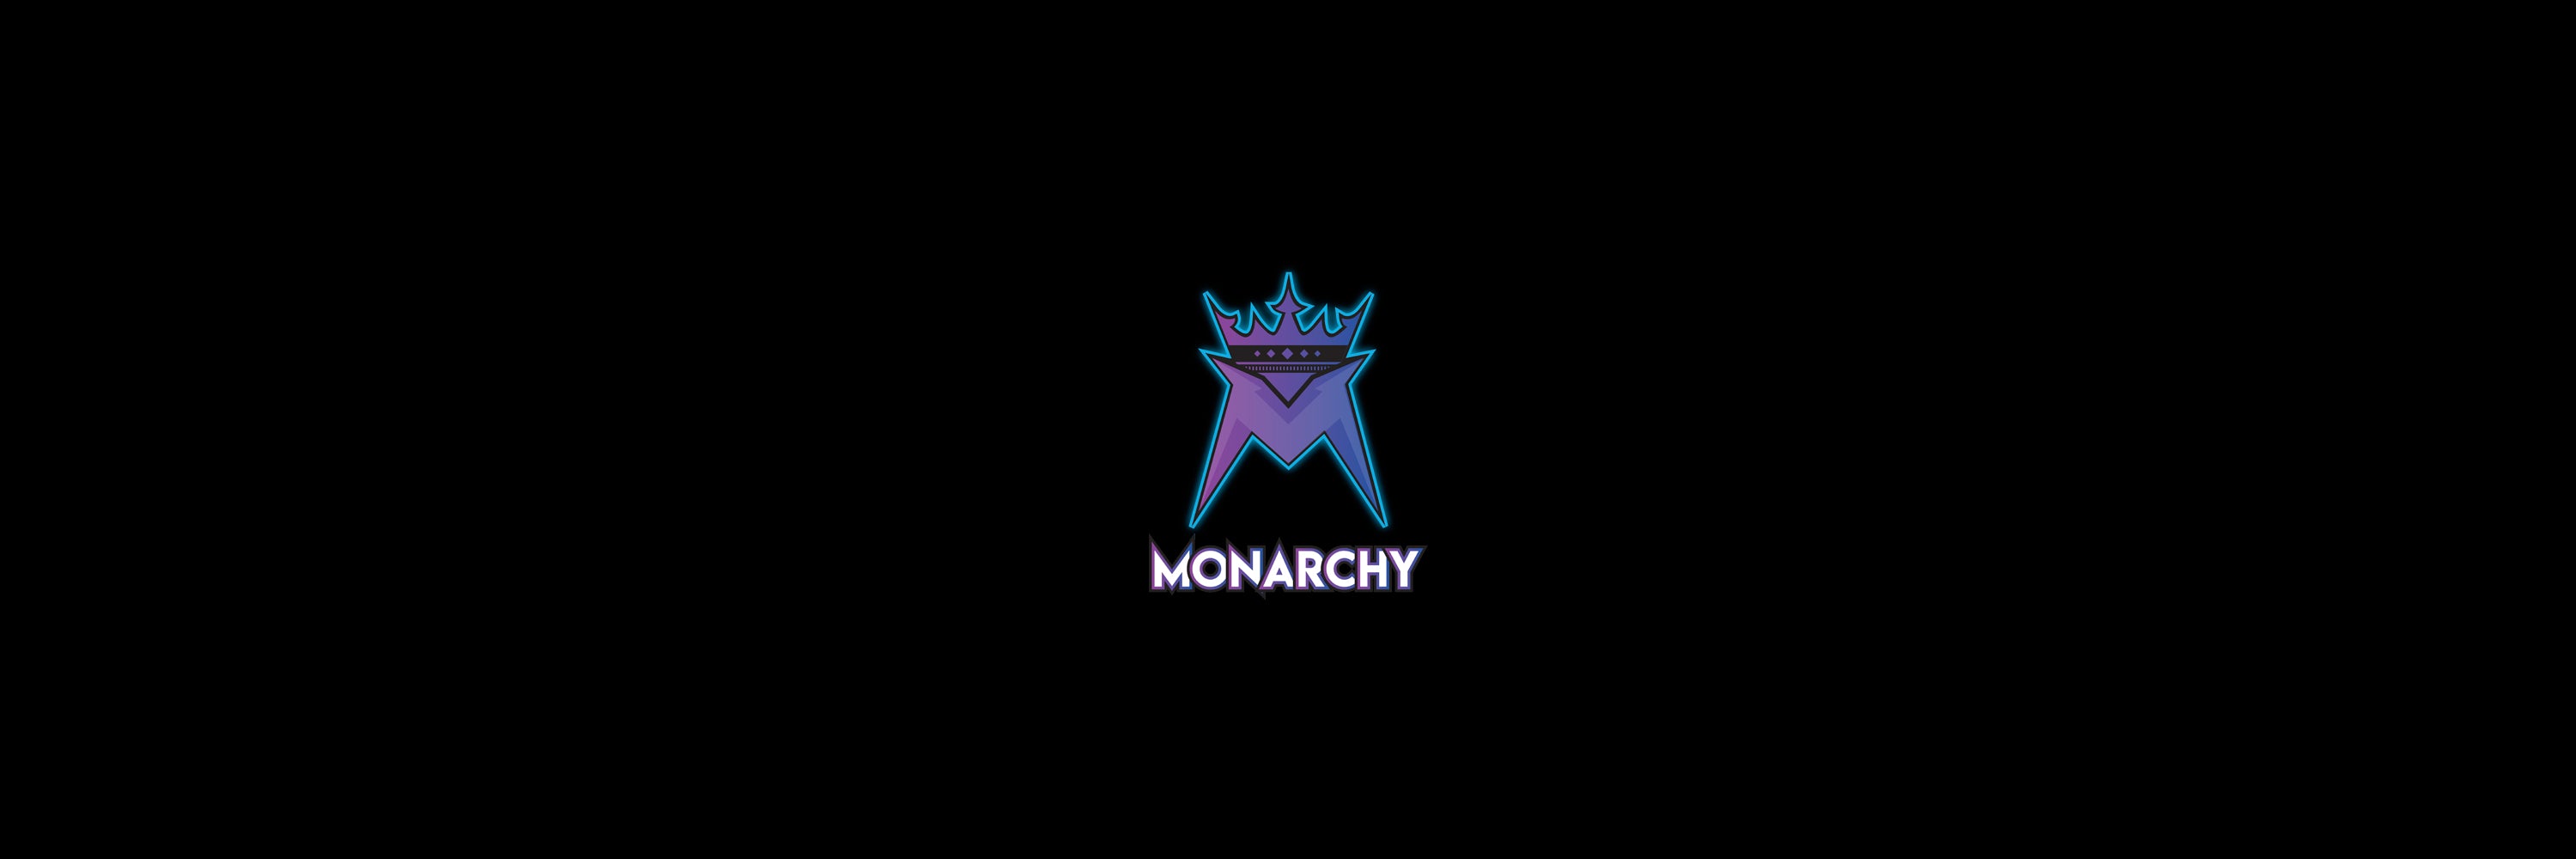 Team Monarchy